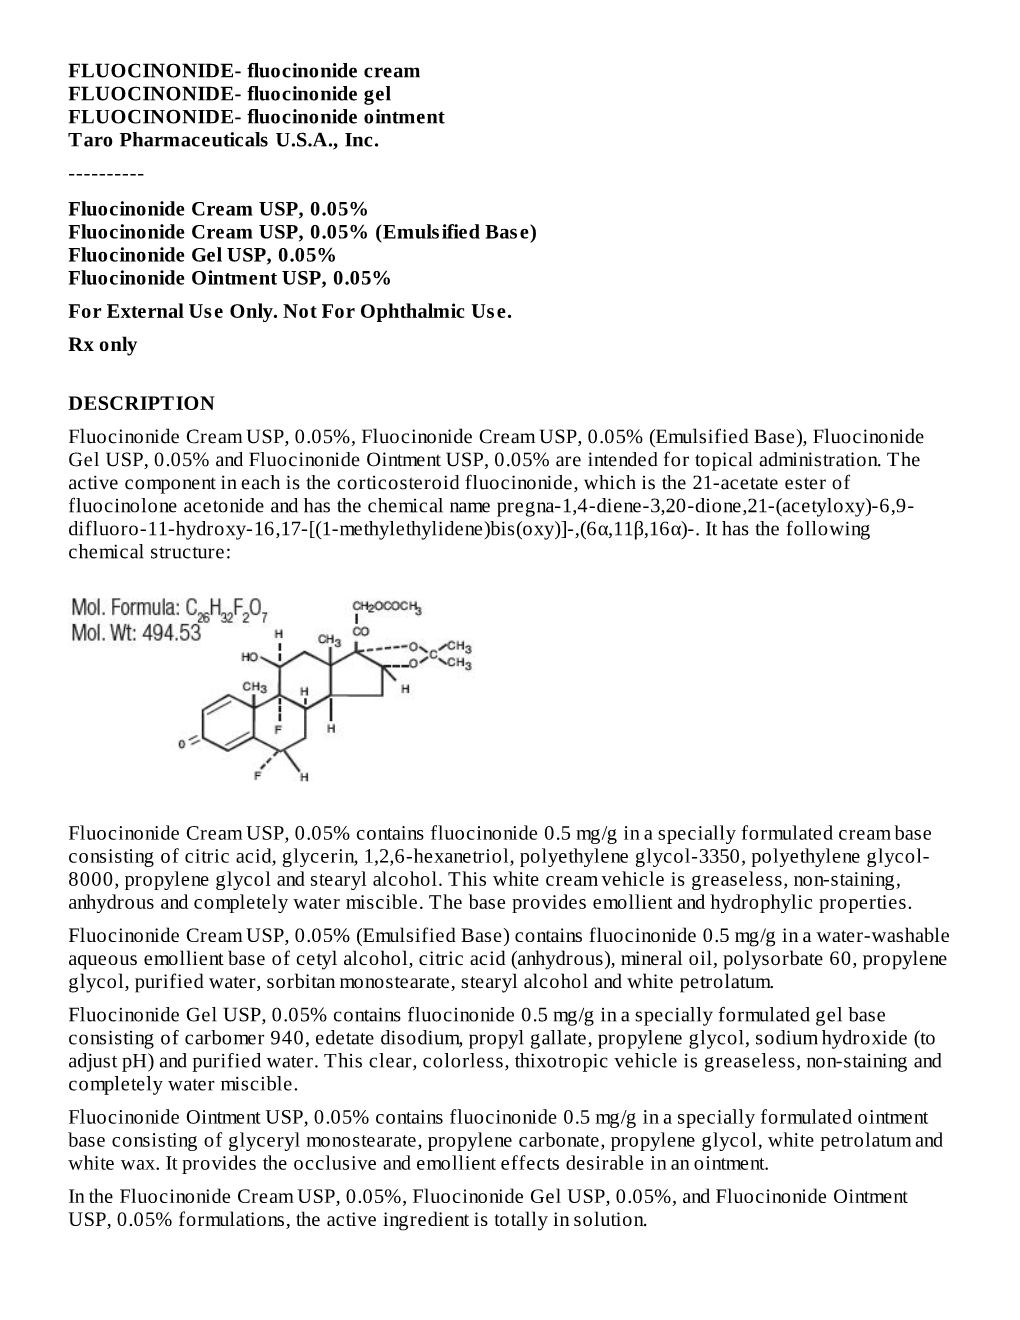 Emulsified Base) Fluocinonide Gel USP, 0.05% Fluocinonide Ointment USP, 0.05% for External Use Only